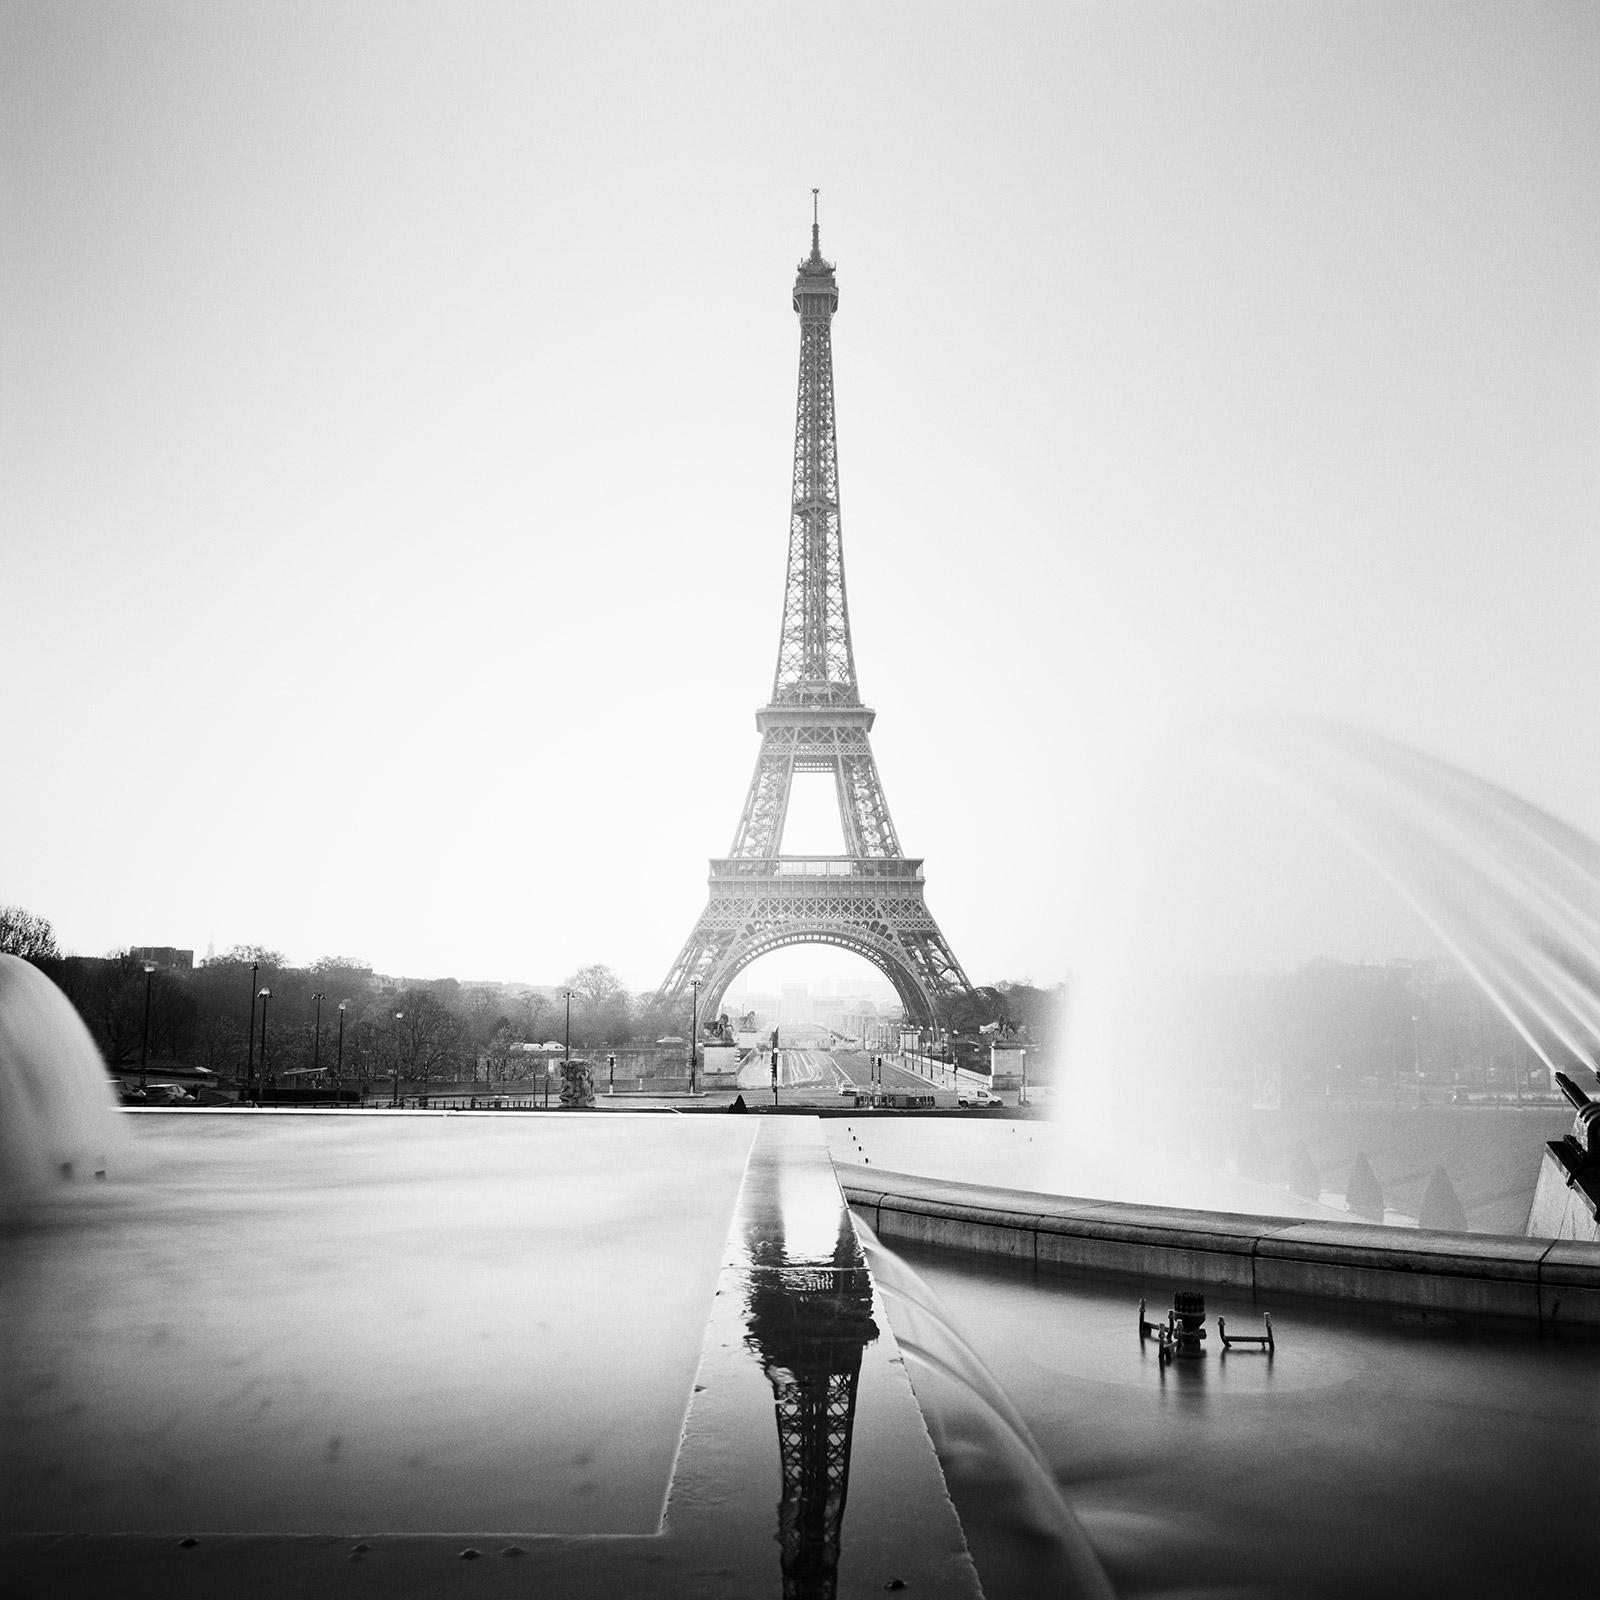 Eiffel Tower fontaine du trocadero Paris, black and white cityscape photography